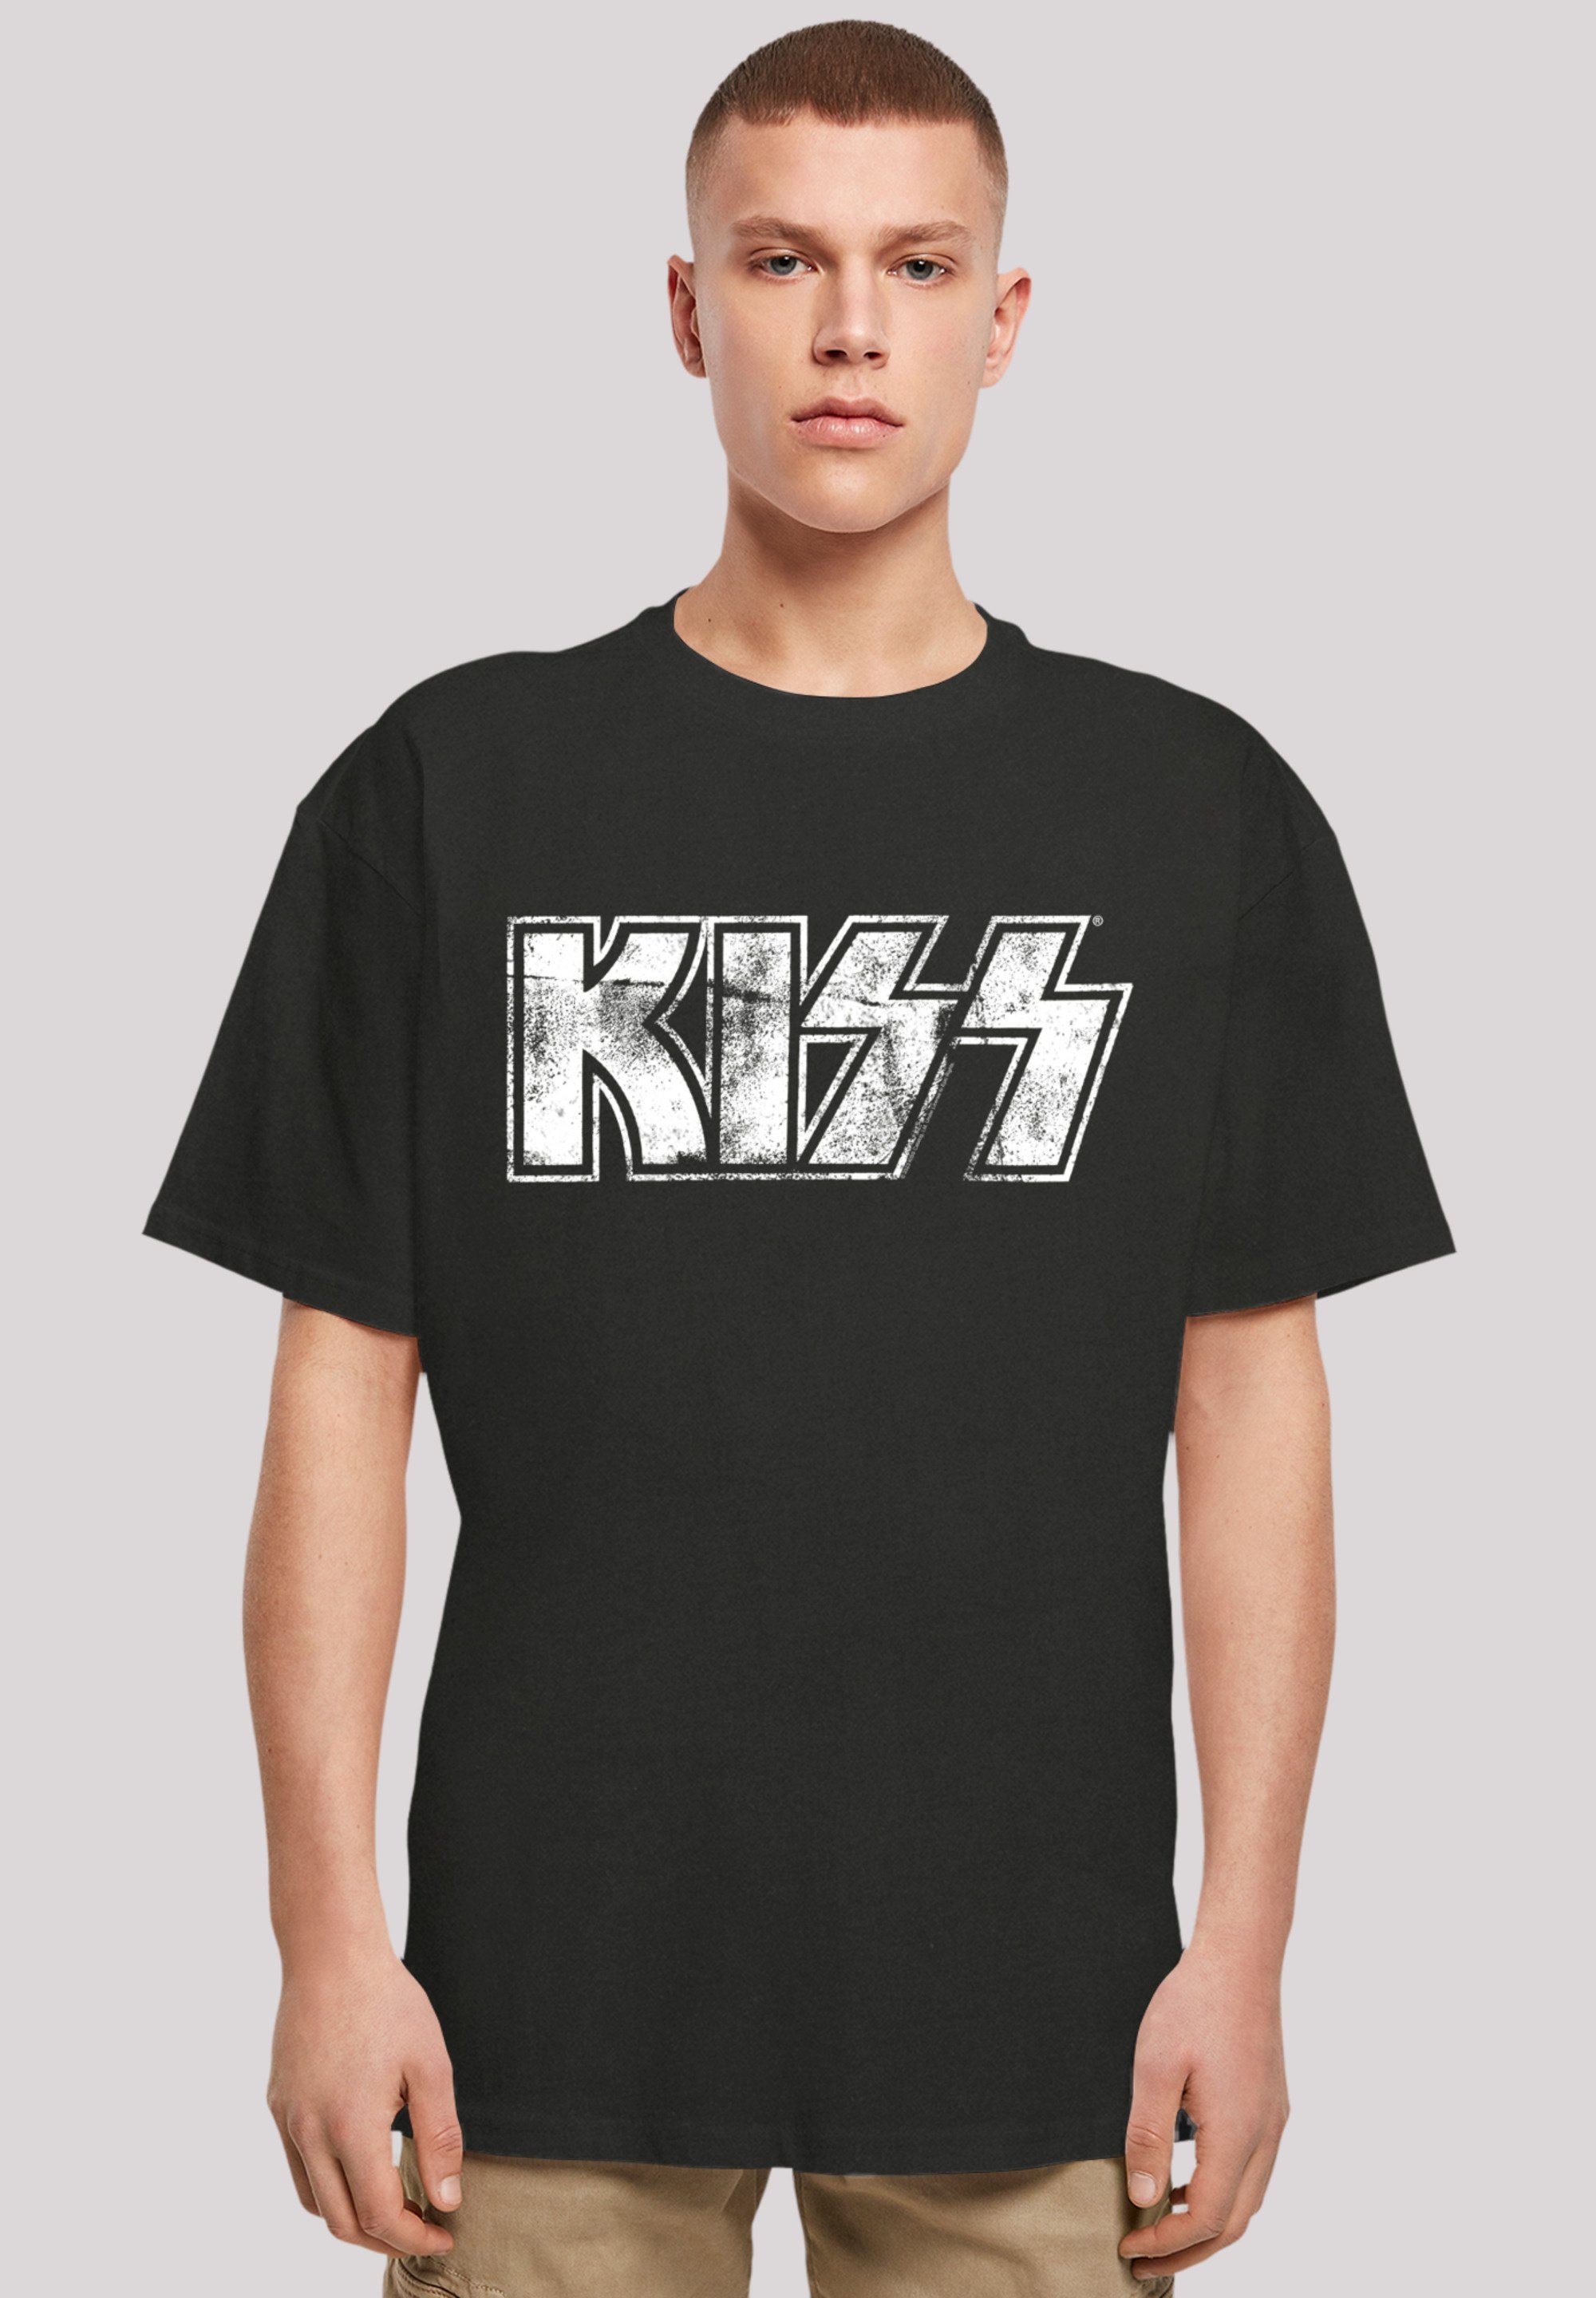 F4NT4STIC T-Shirt Kiss Rock Band Vintage Logo Premium Qualität, Musik, By Rock Off schwarz